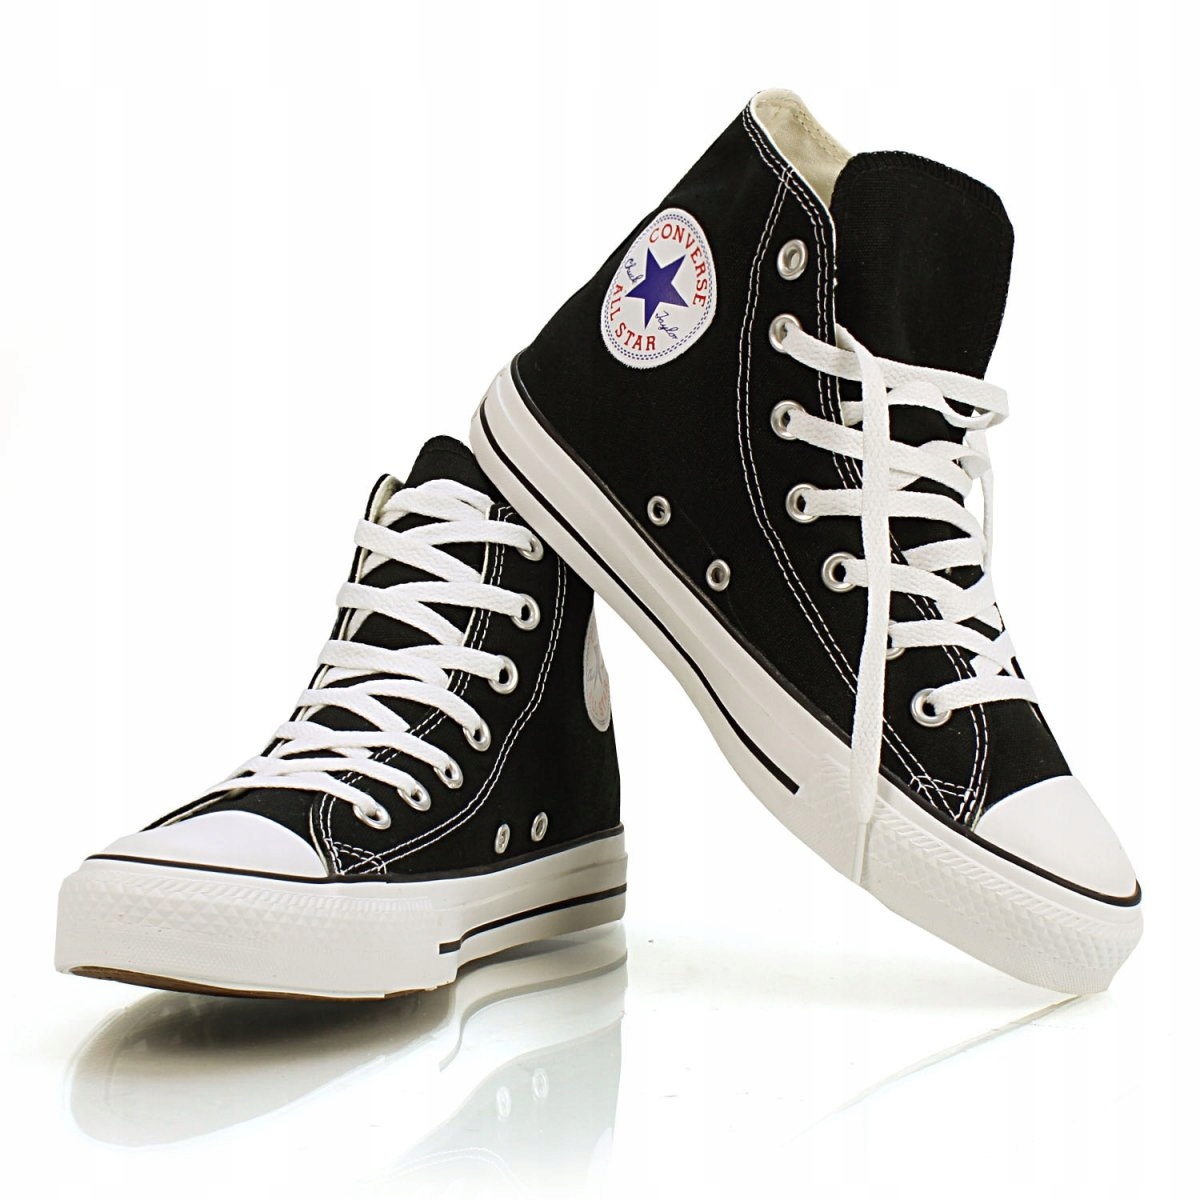 Converse buty trampki wysokie czarne All 37 13198847486 - Allegro.pl